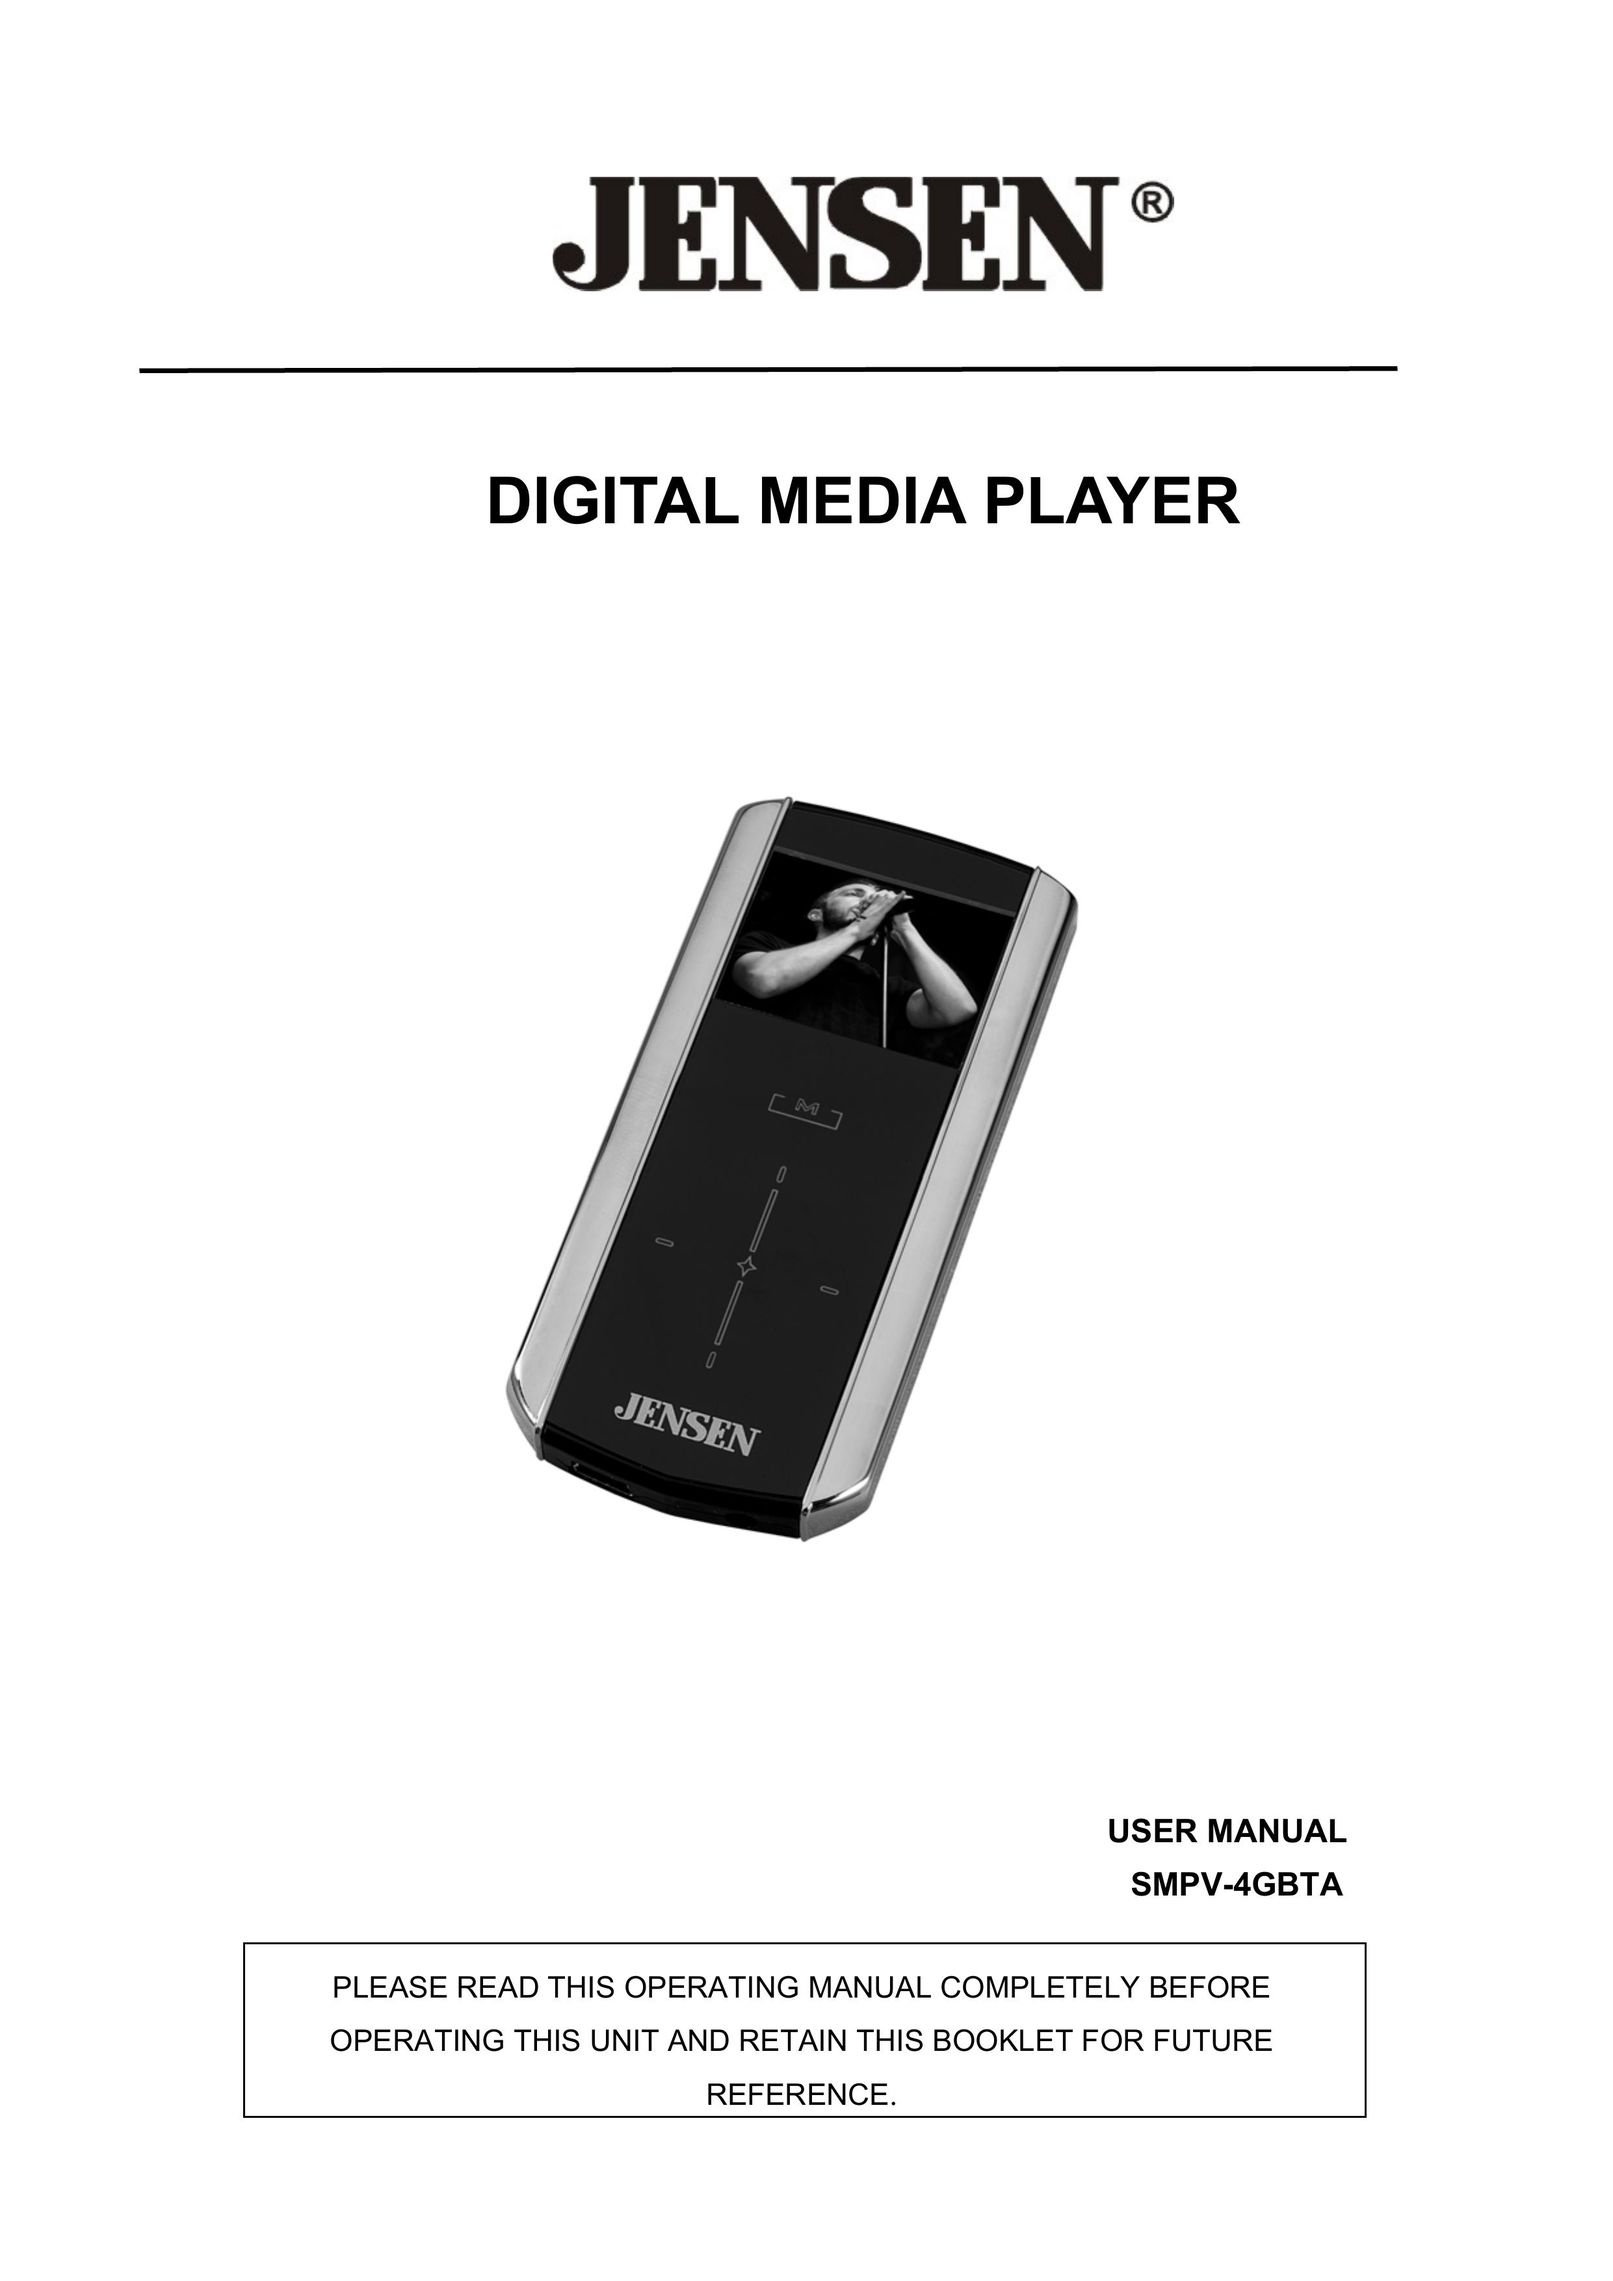 Jensen SMPV-4GBTA MP3 Player User Manual